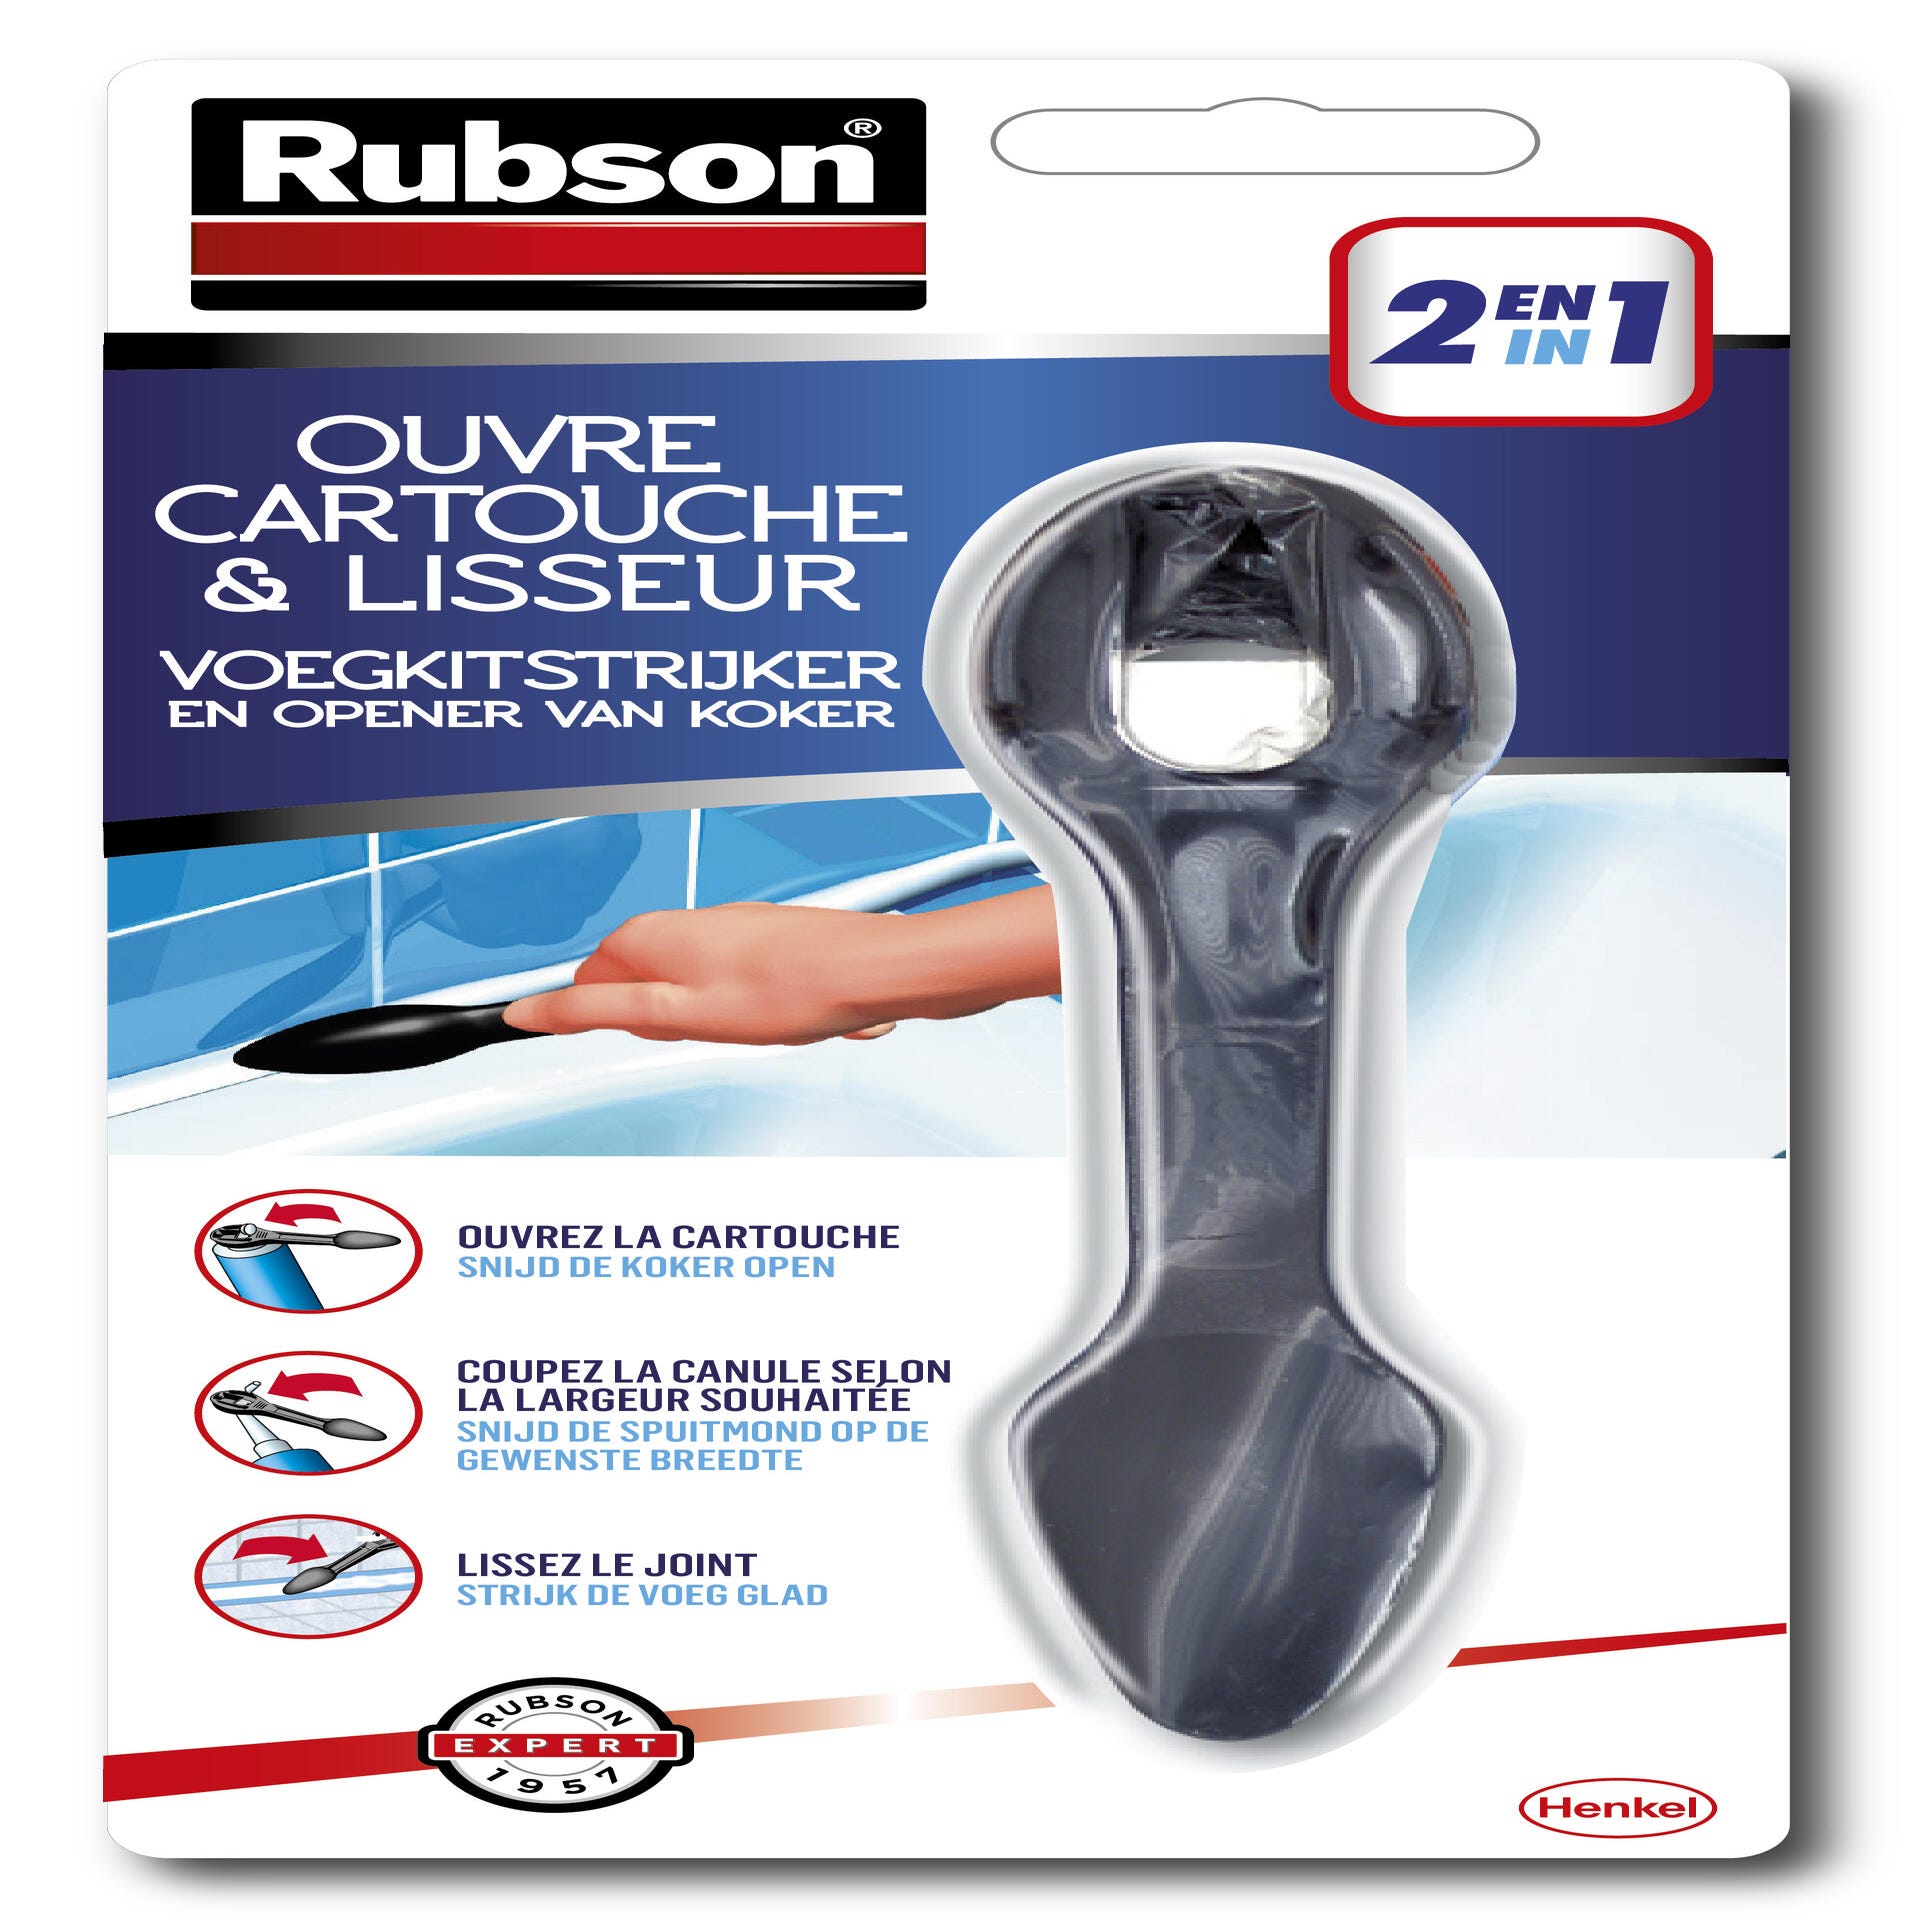 Tube enlève-joint pour mastic silicone RUBSON, transparent 1